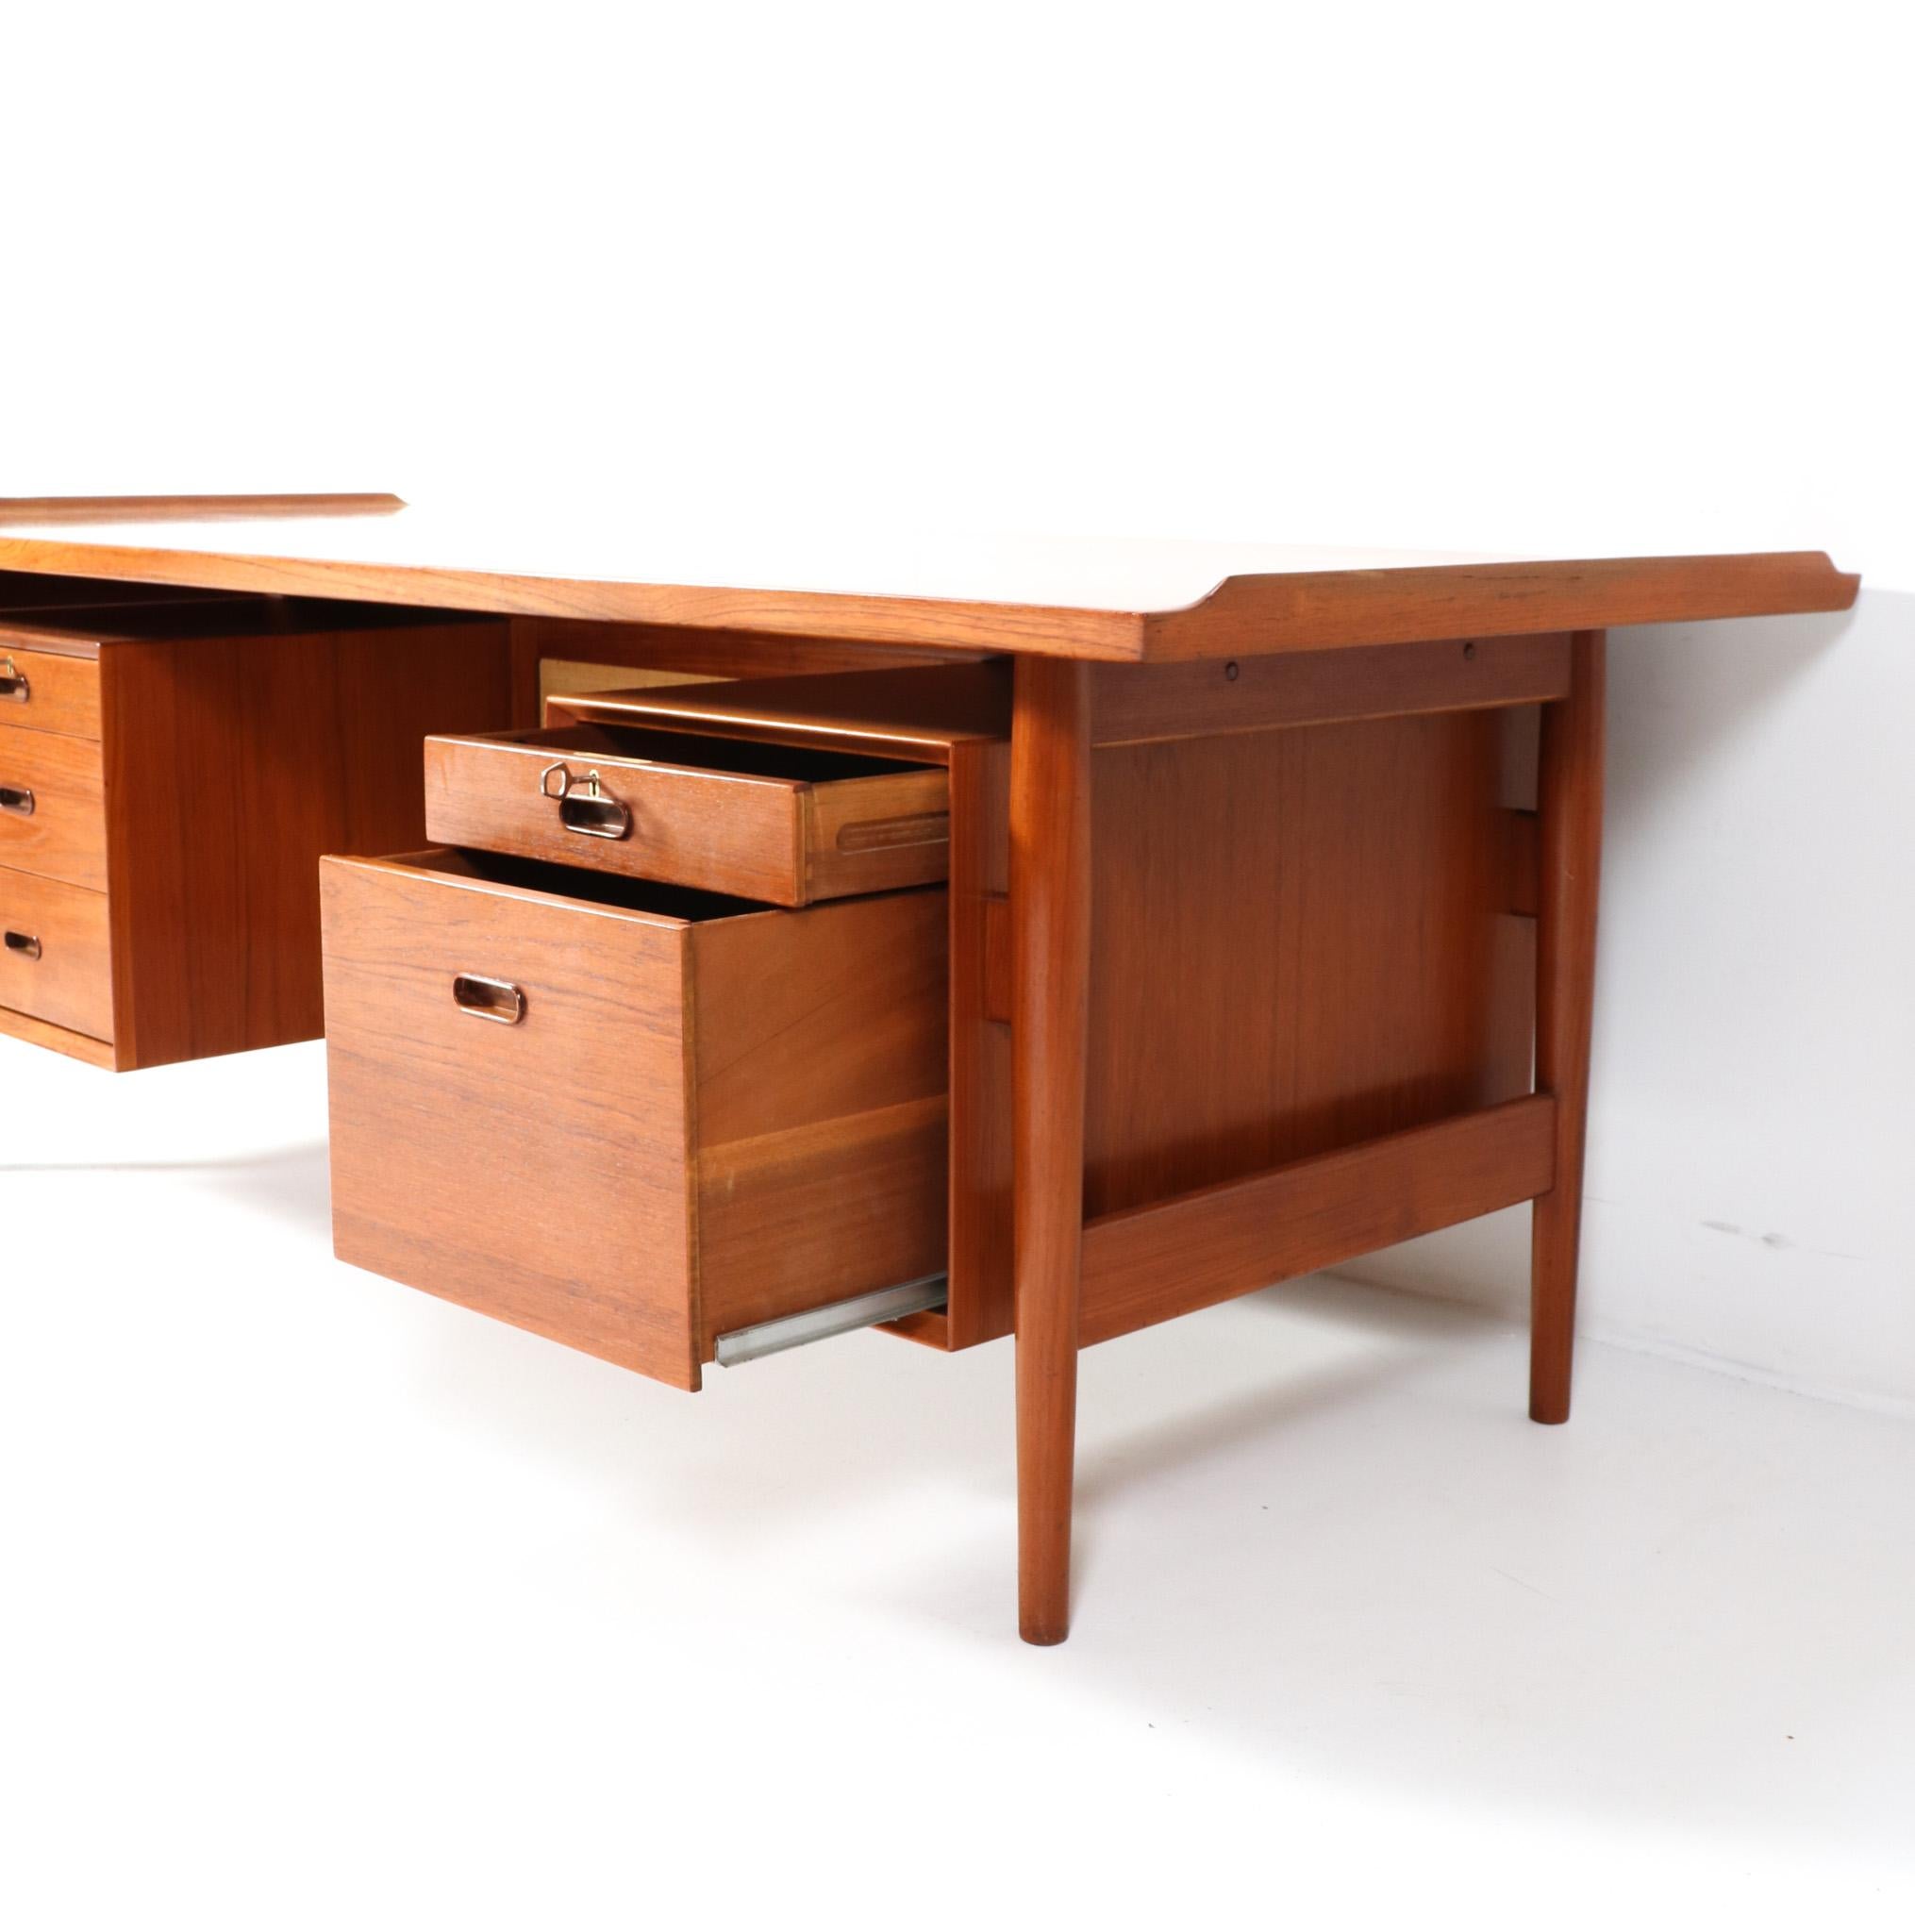 Mid-20th Century Teak Mid-Century Modern Executive Desk 207 by Arne Vodder for Sibast, 1960s For Sale